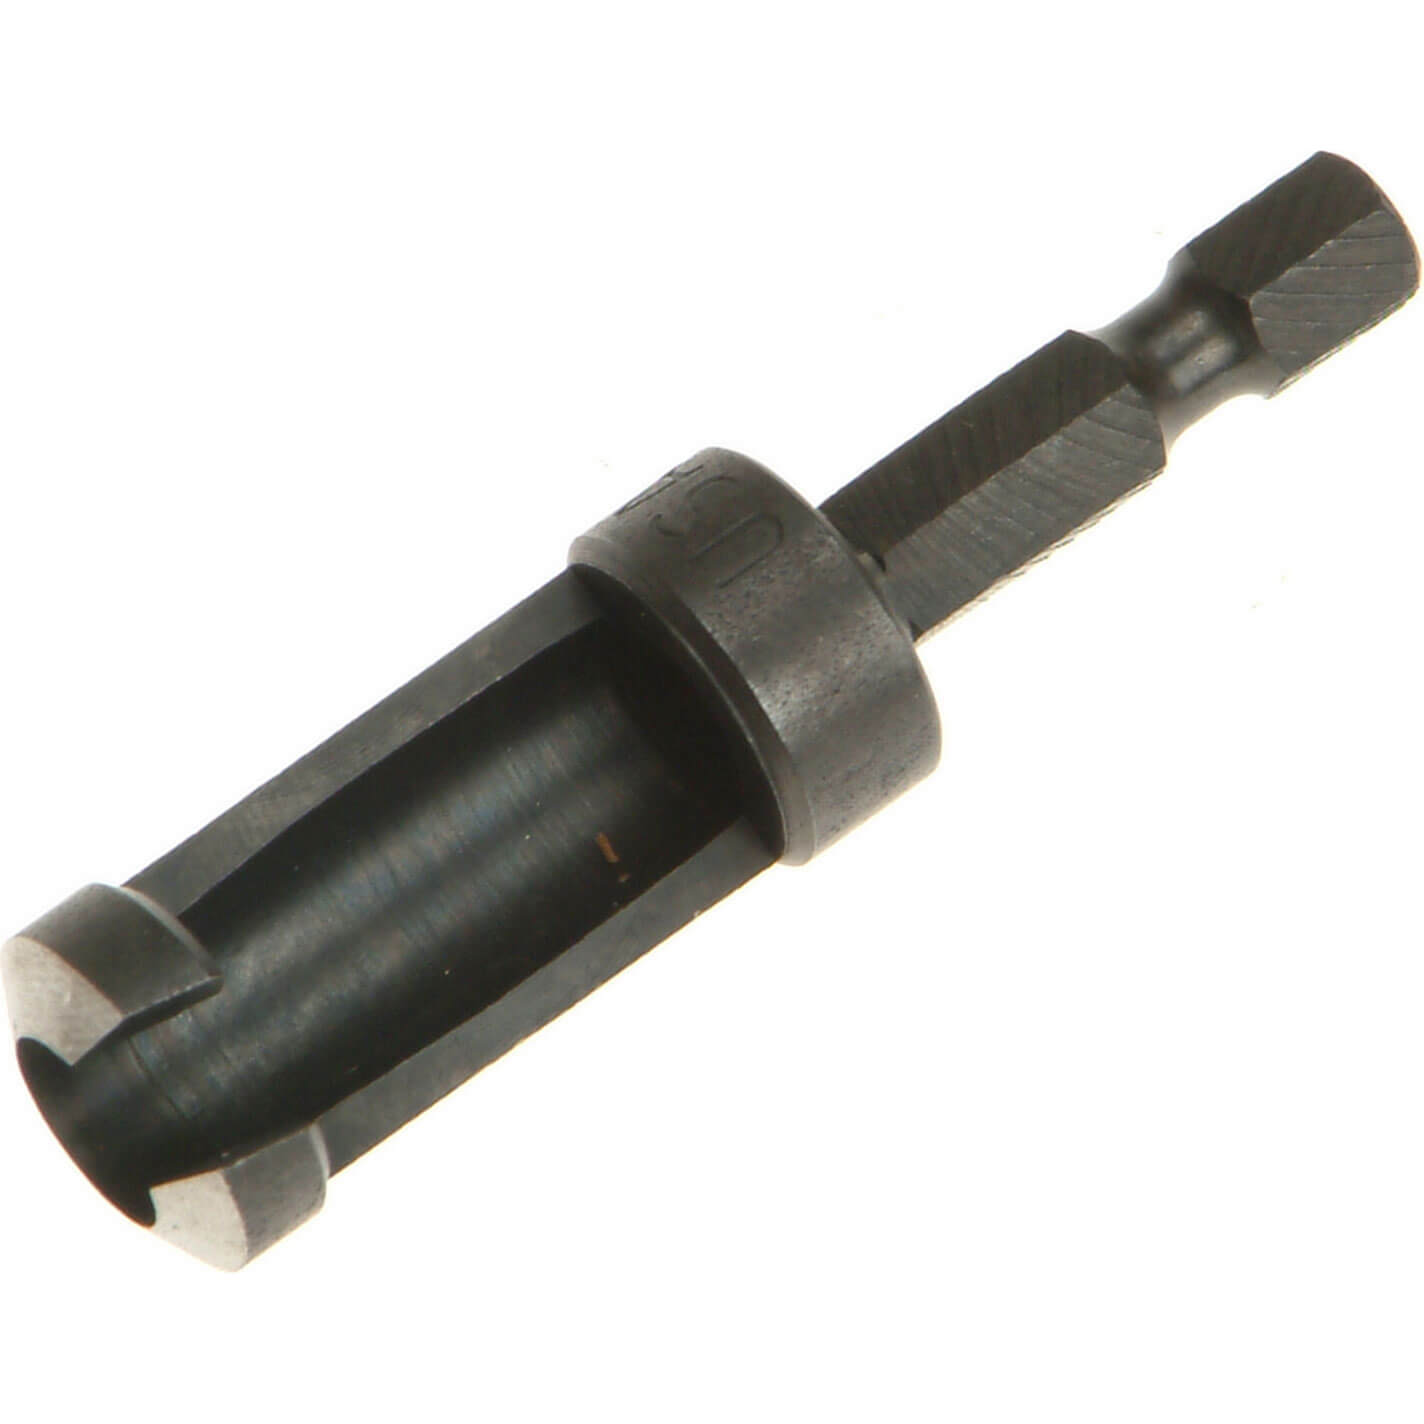 Image of Disston Plug Cutter Size 8